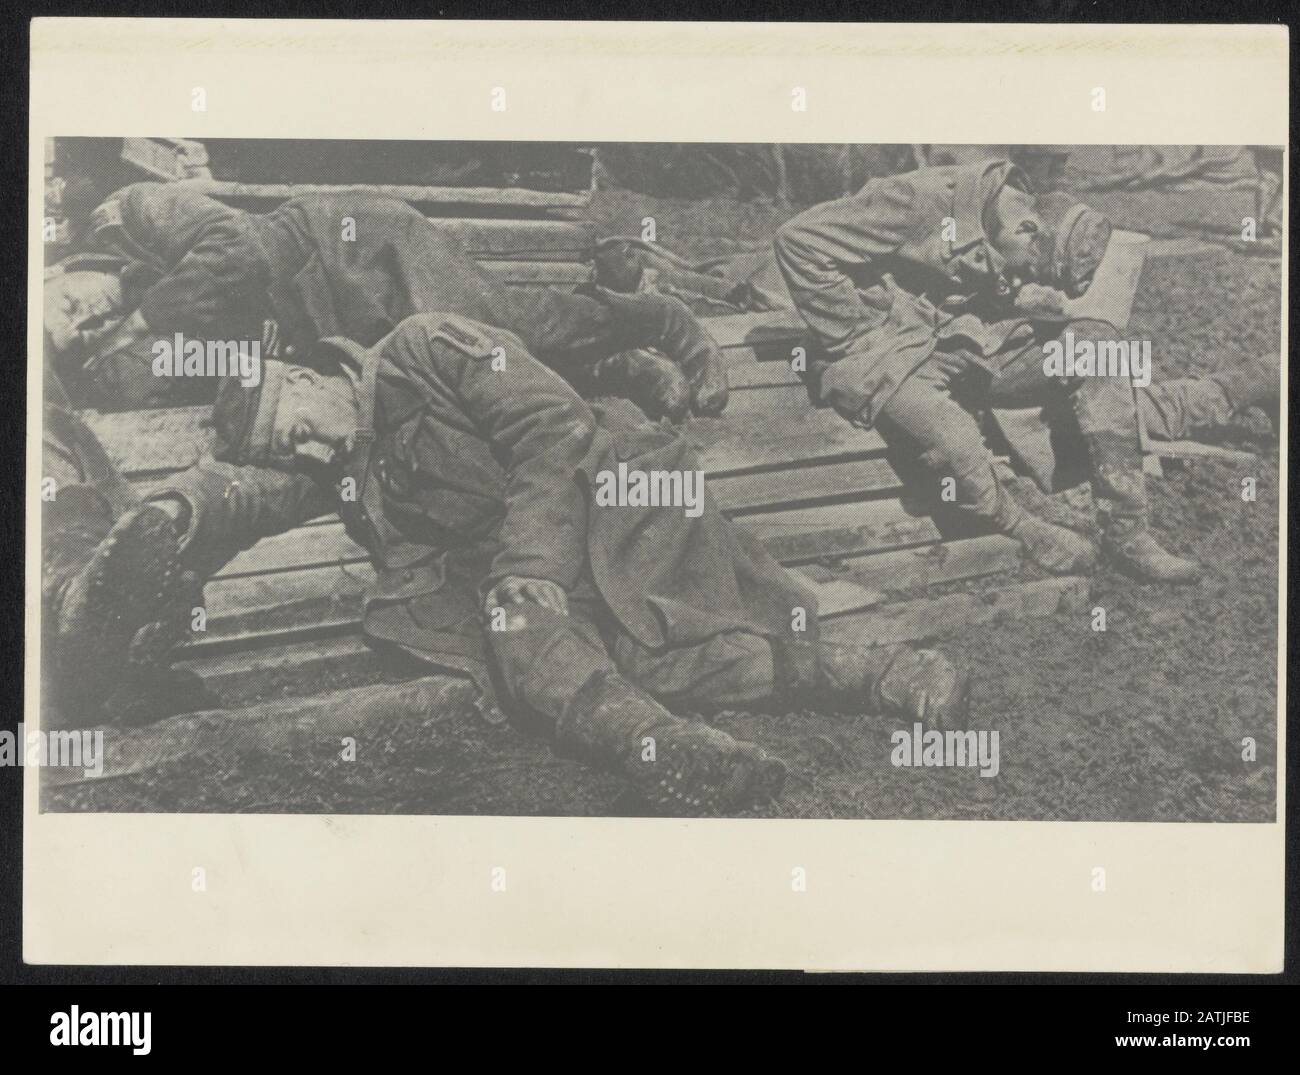 Description: Group of German soldiers, sleeping in the open air date: December 1917 Keywords: WWI, soldiers, sleep Stock Photo